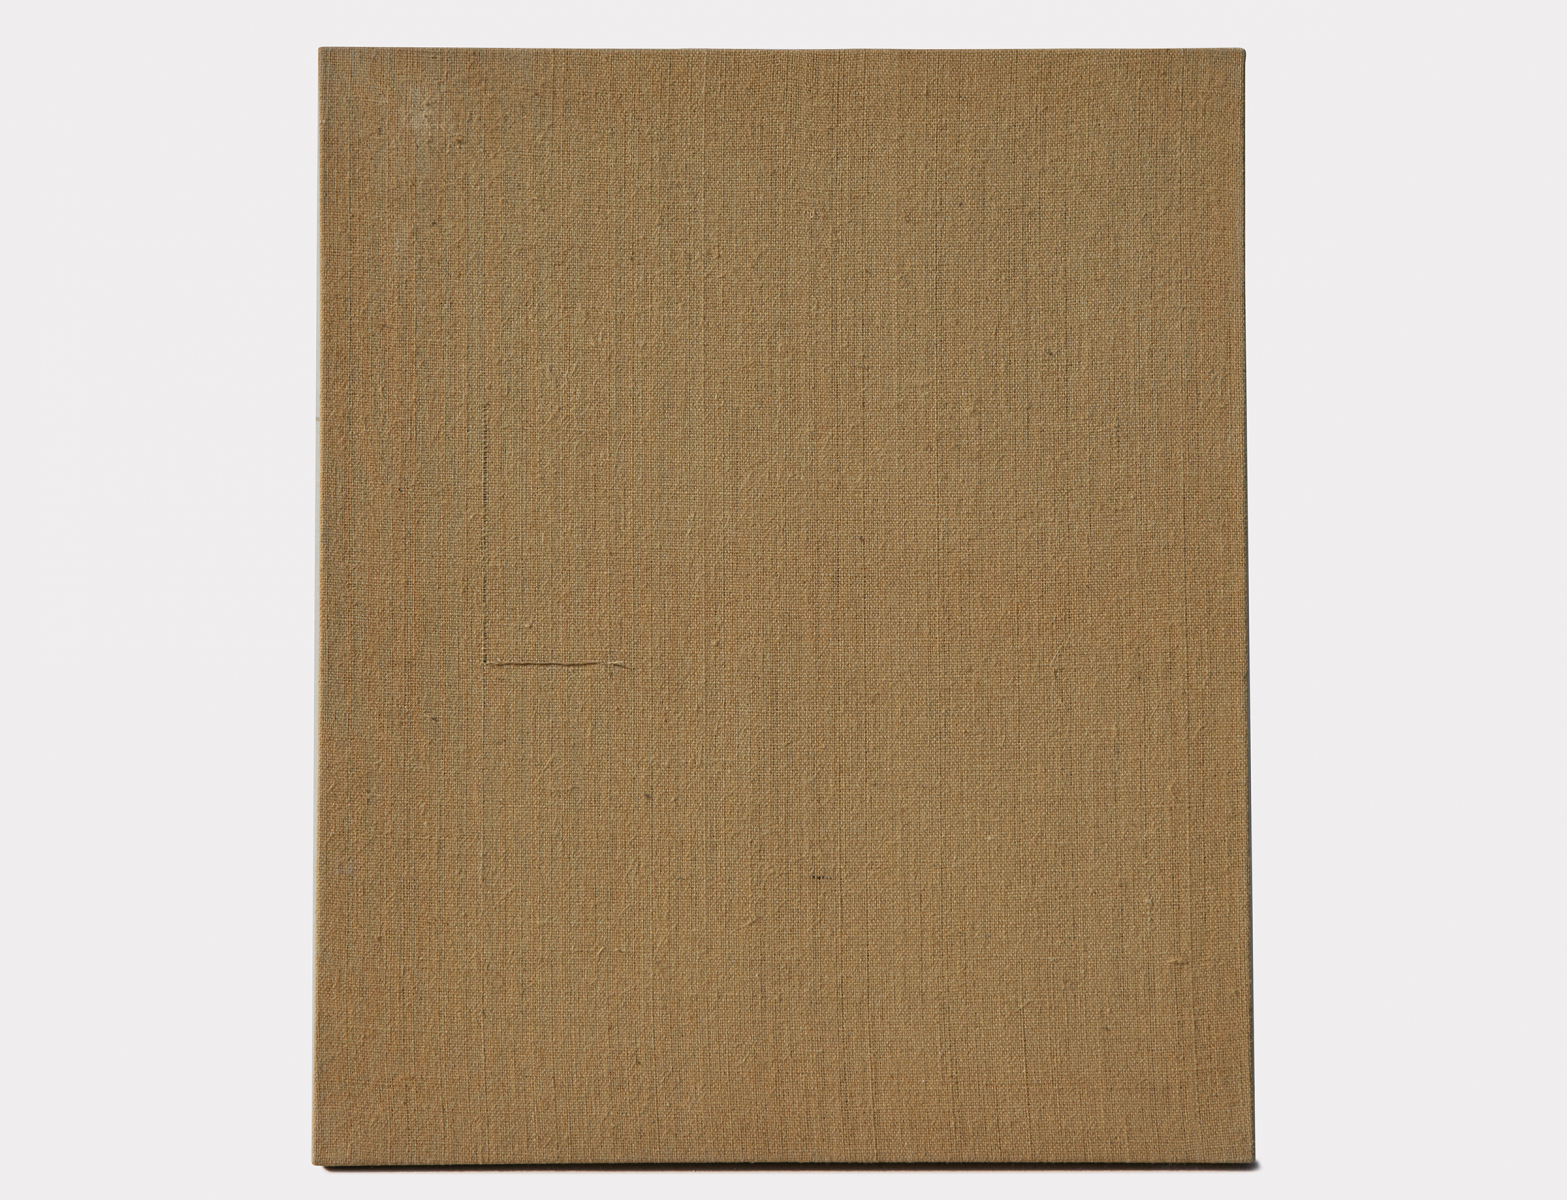 Untitled-7562, 1975, Hemp Cloth, 72.3x61cm